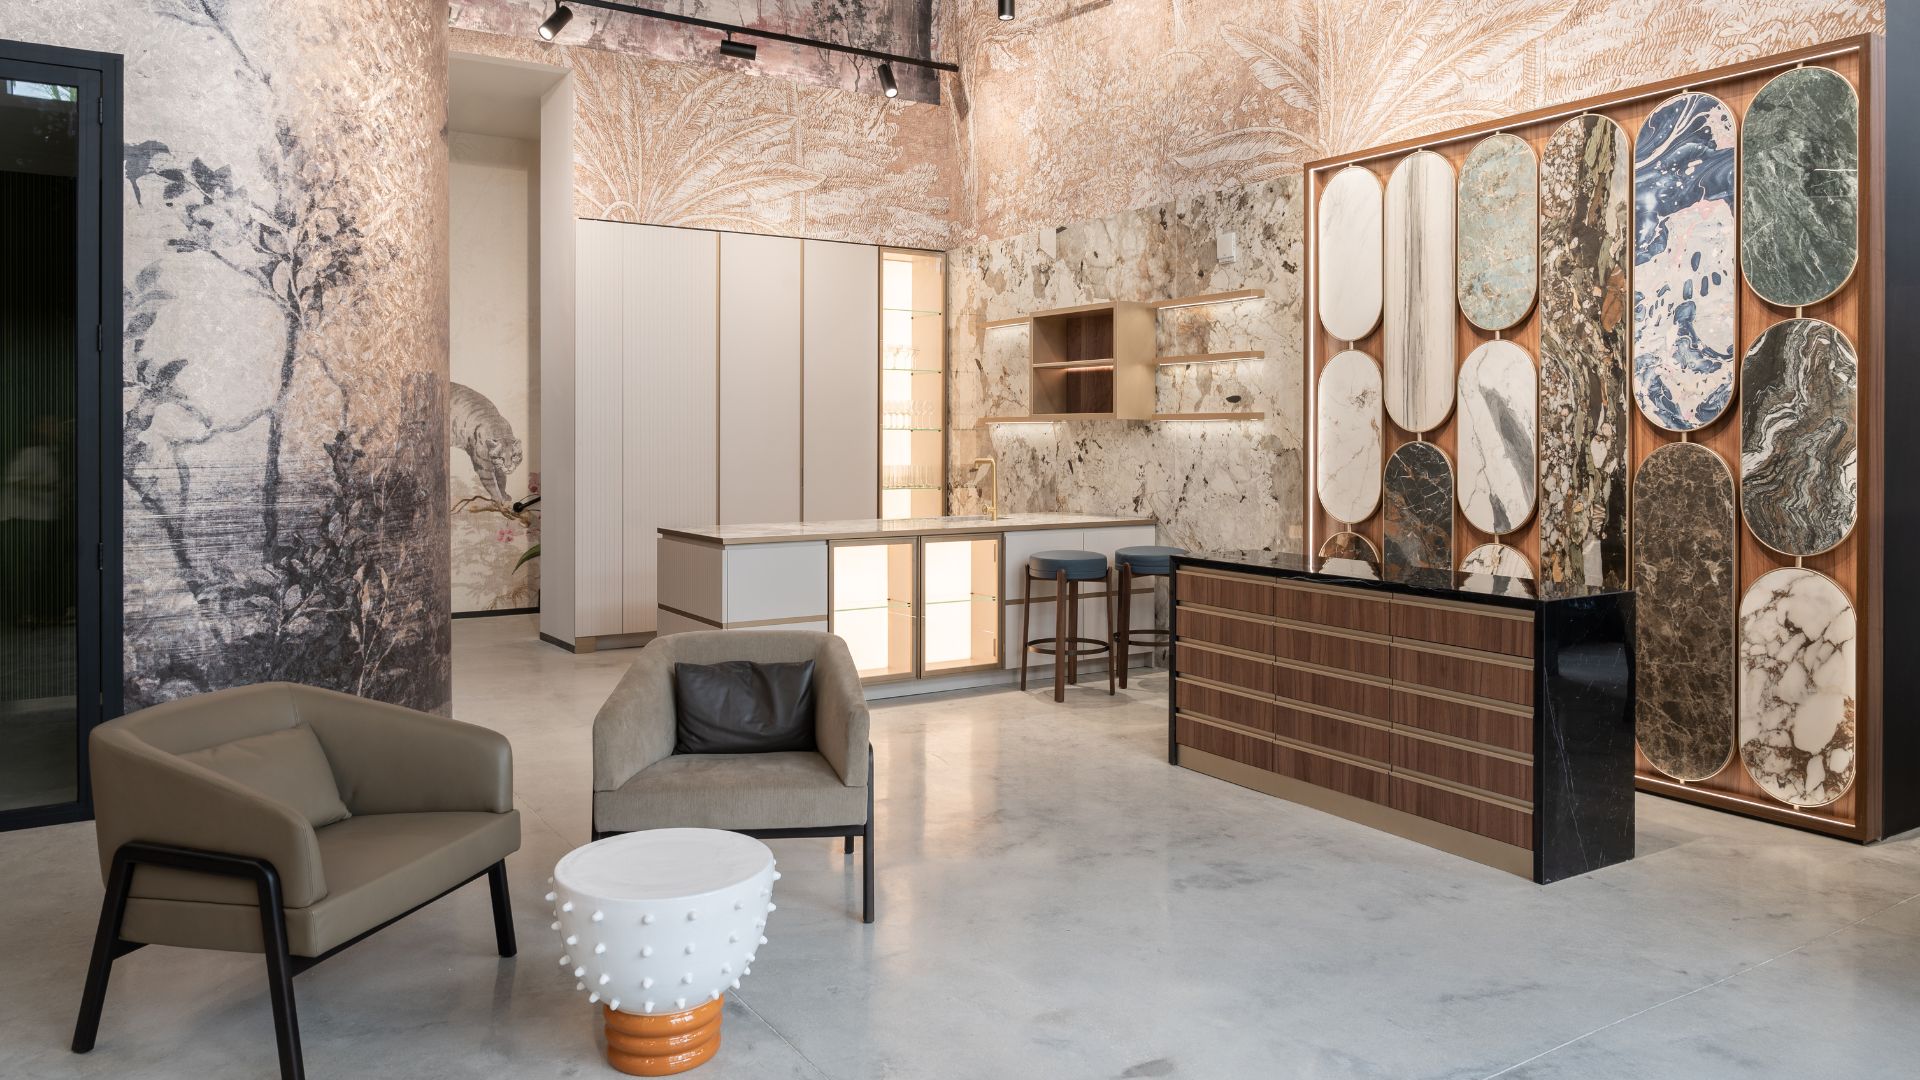 Lacasacontinua showroom by ovre.design _ miami - cover